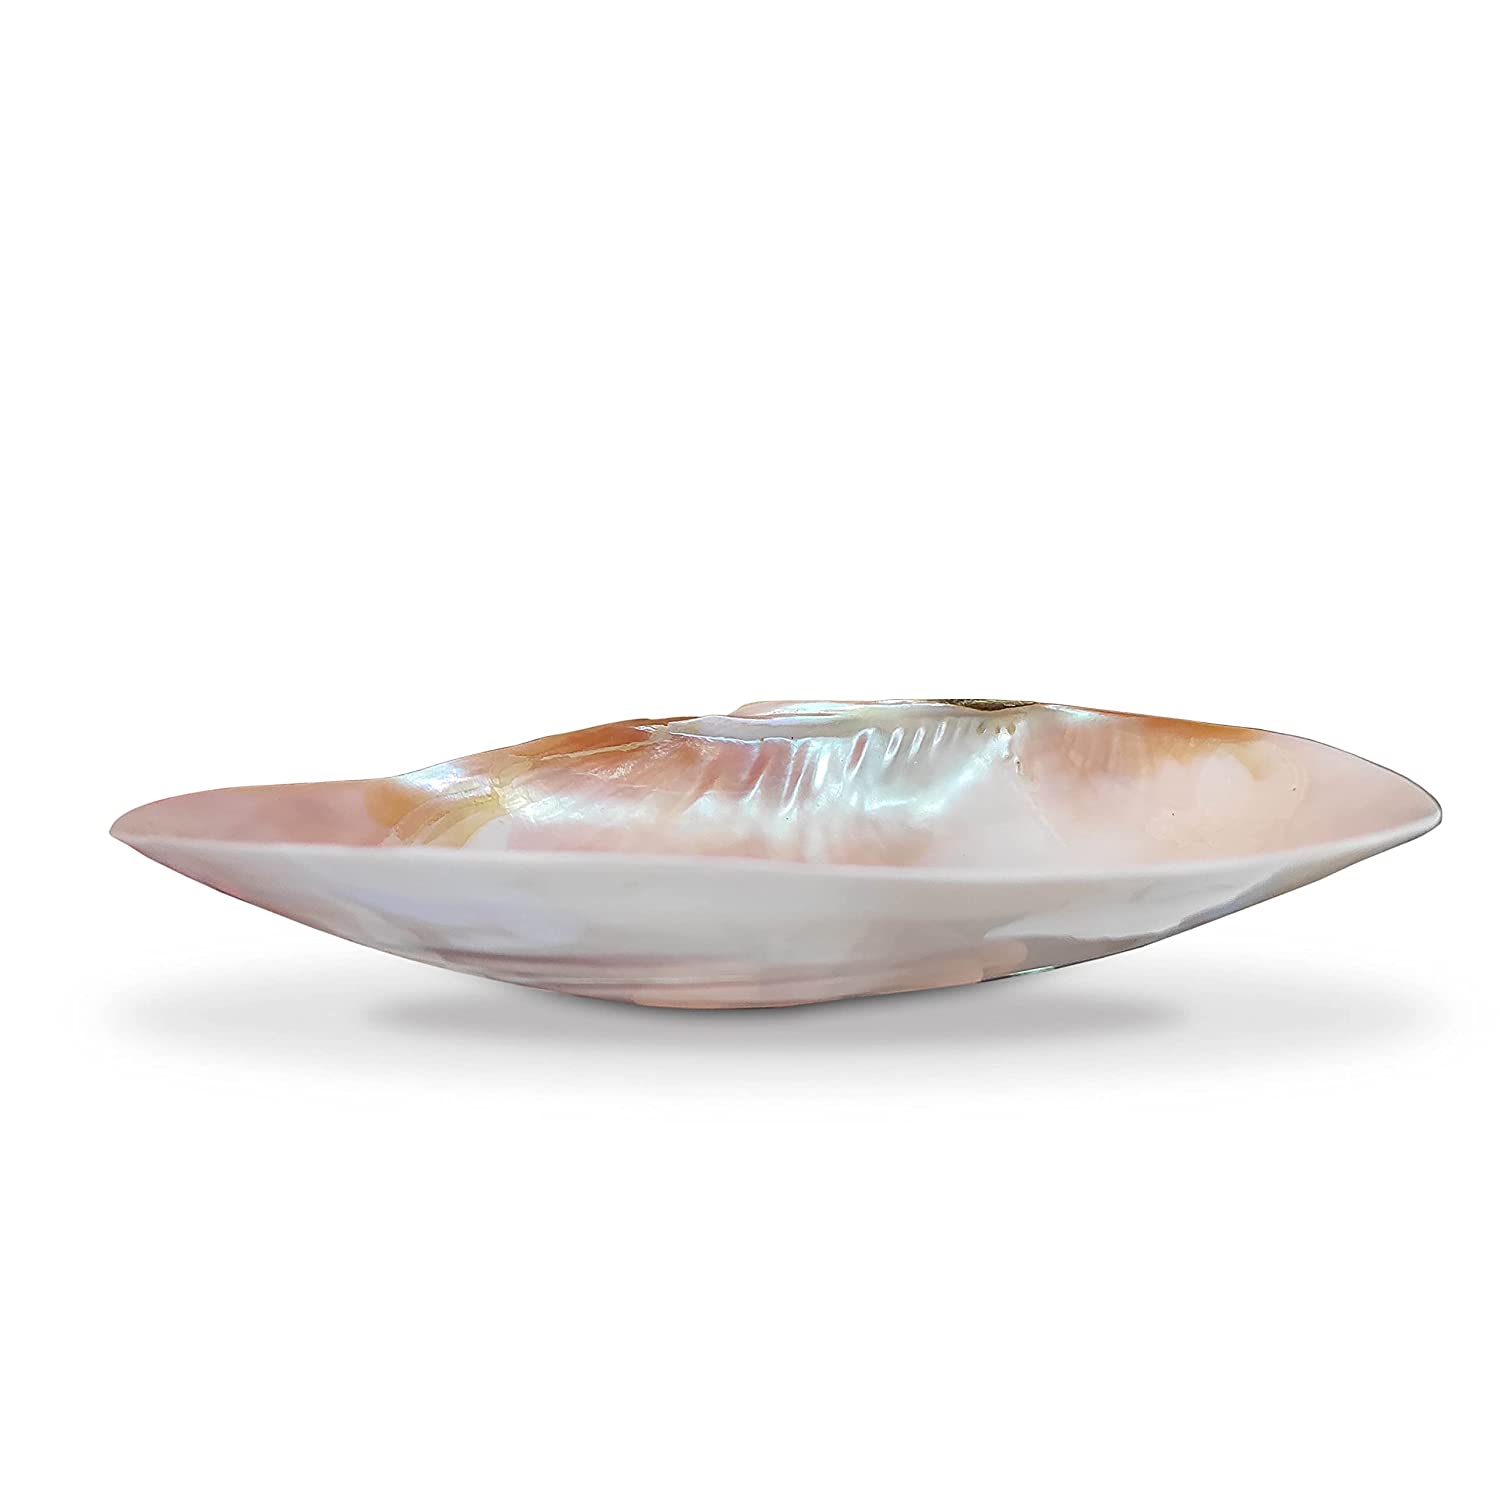 Big Clam Shell / Platter size 23-26 cm